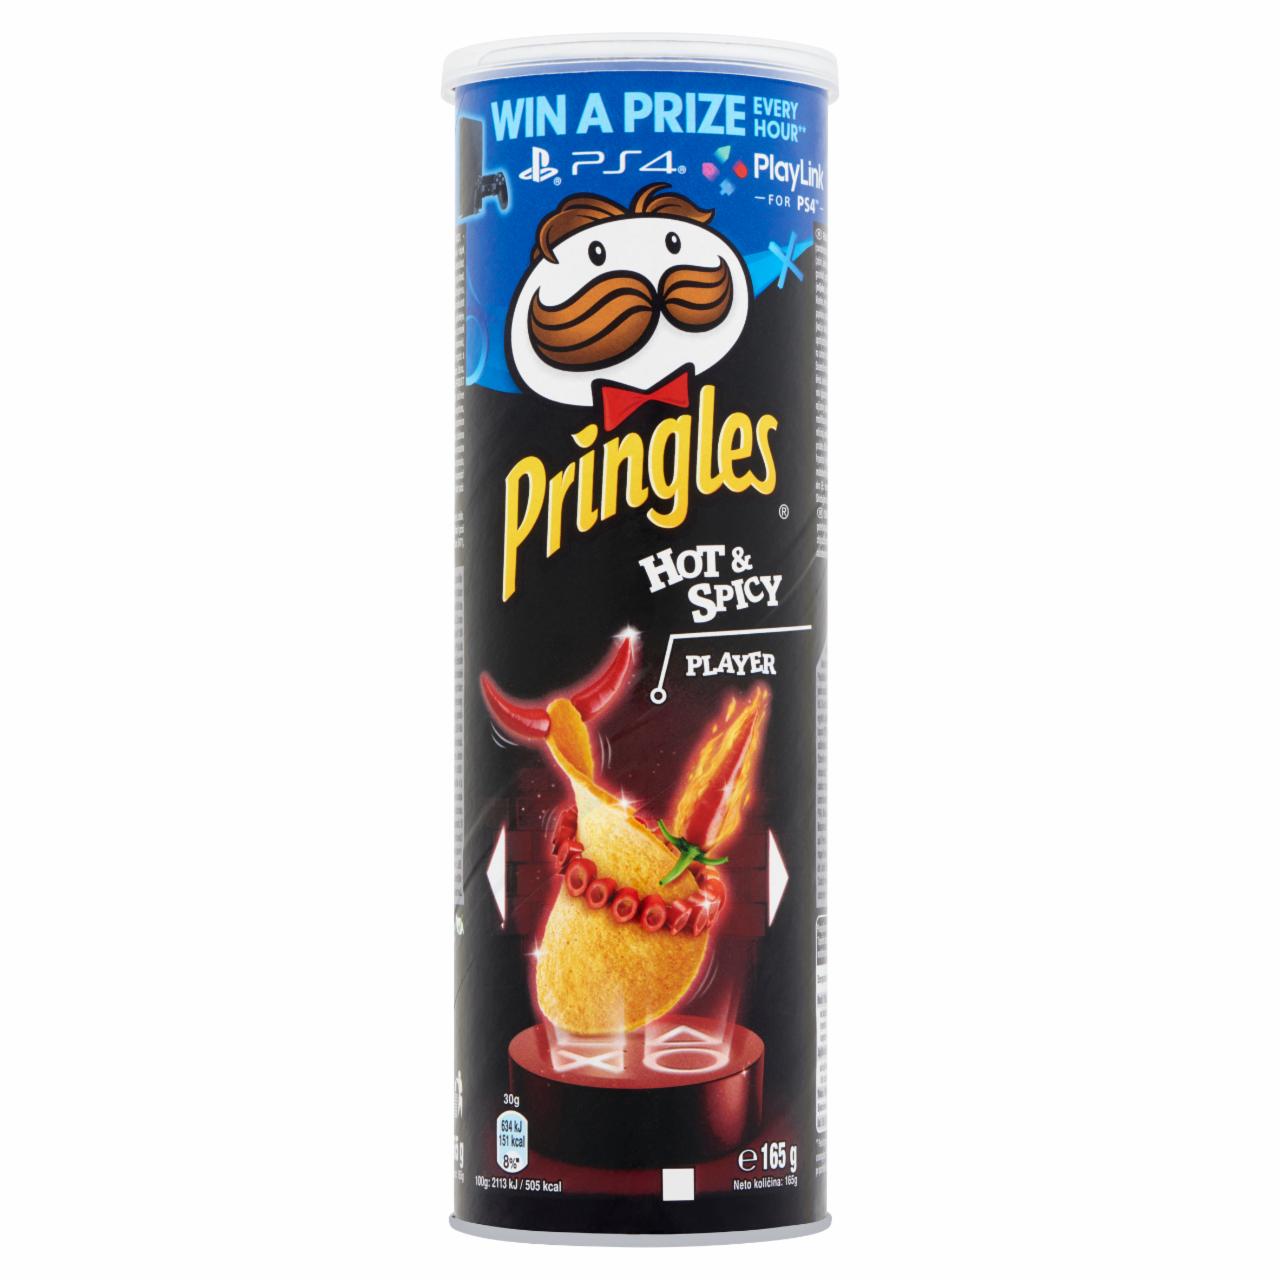 Képek - Pringles Hot & Spicy csípős ízesítésű snack 165 g